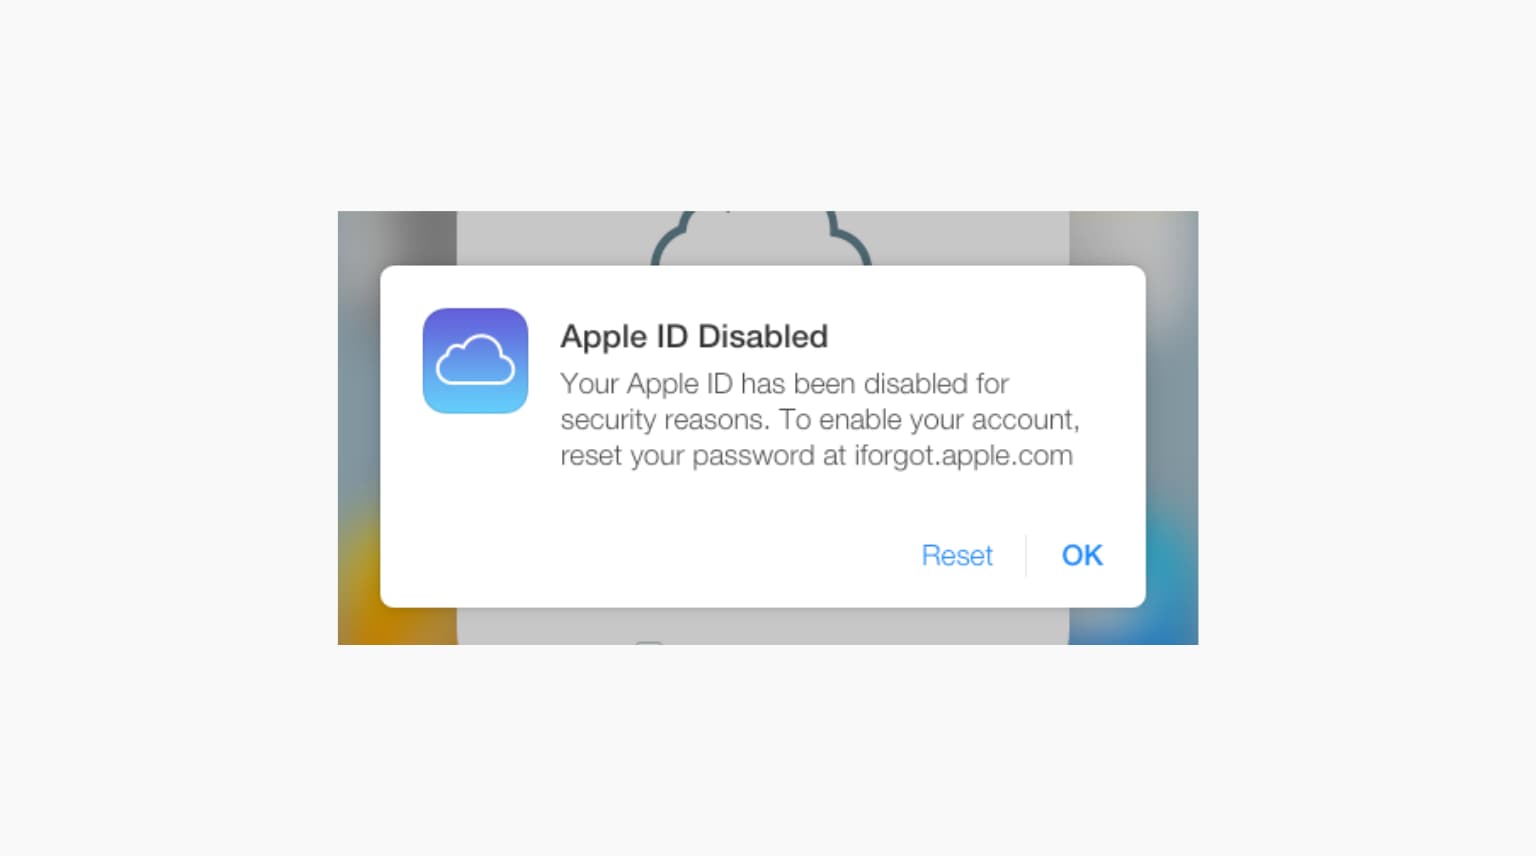 Apple ID Disabled alert